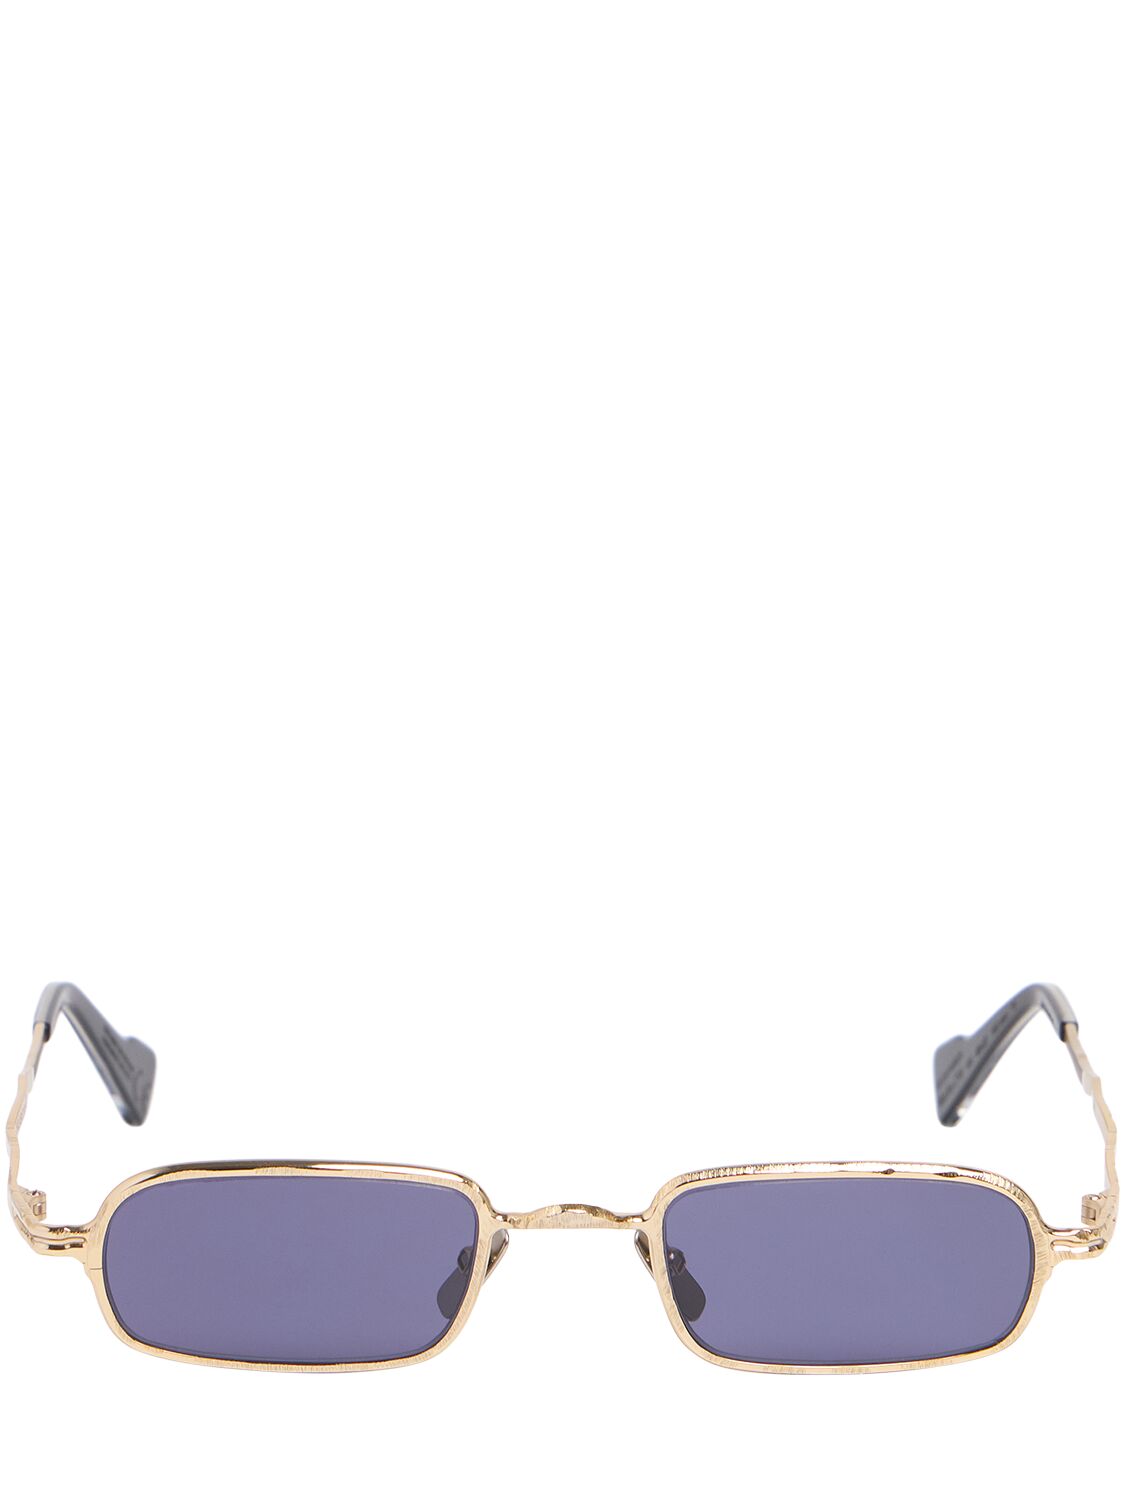 Kuboraum Berlin Z18 Squared Metal Sunglasses In Gold,purple